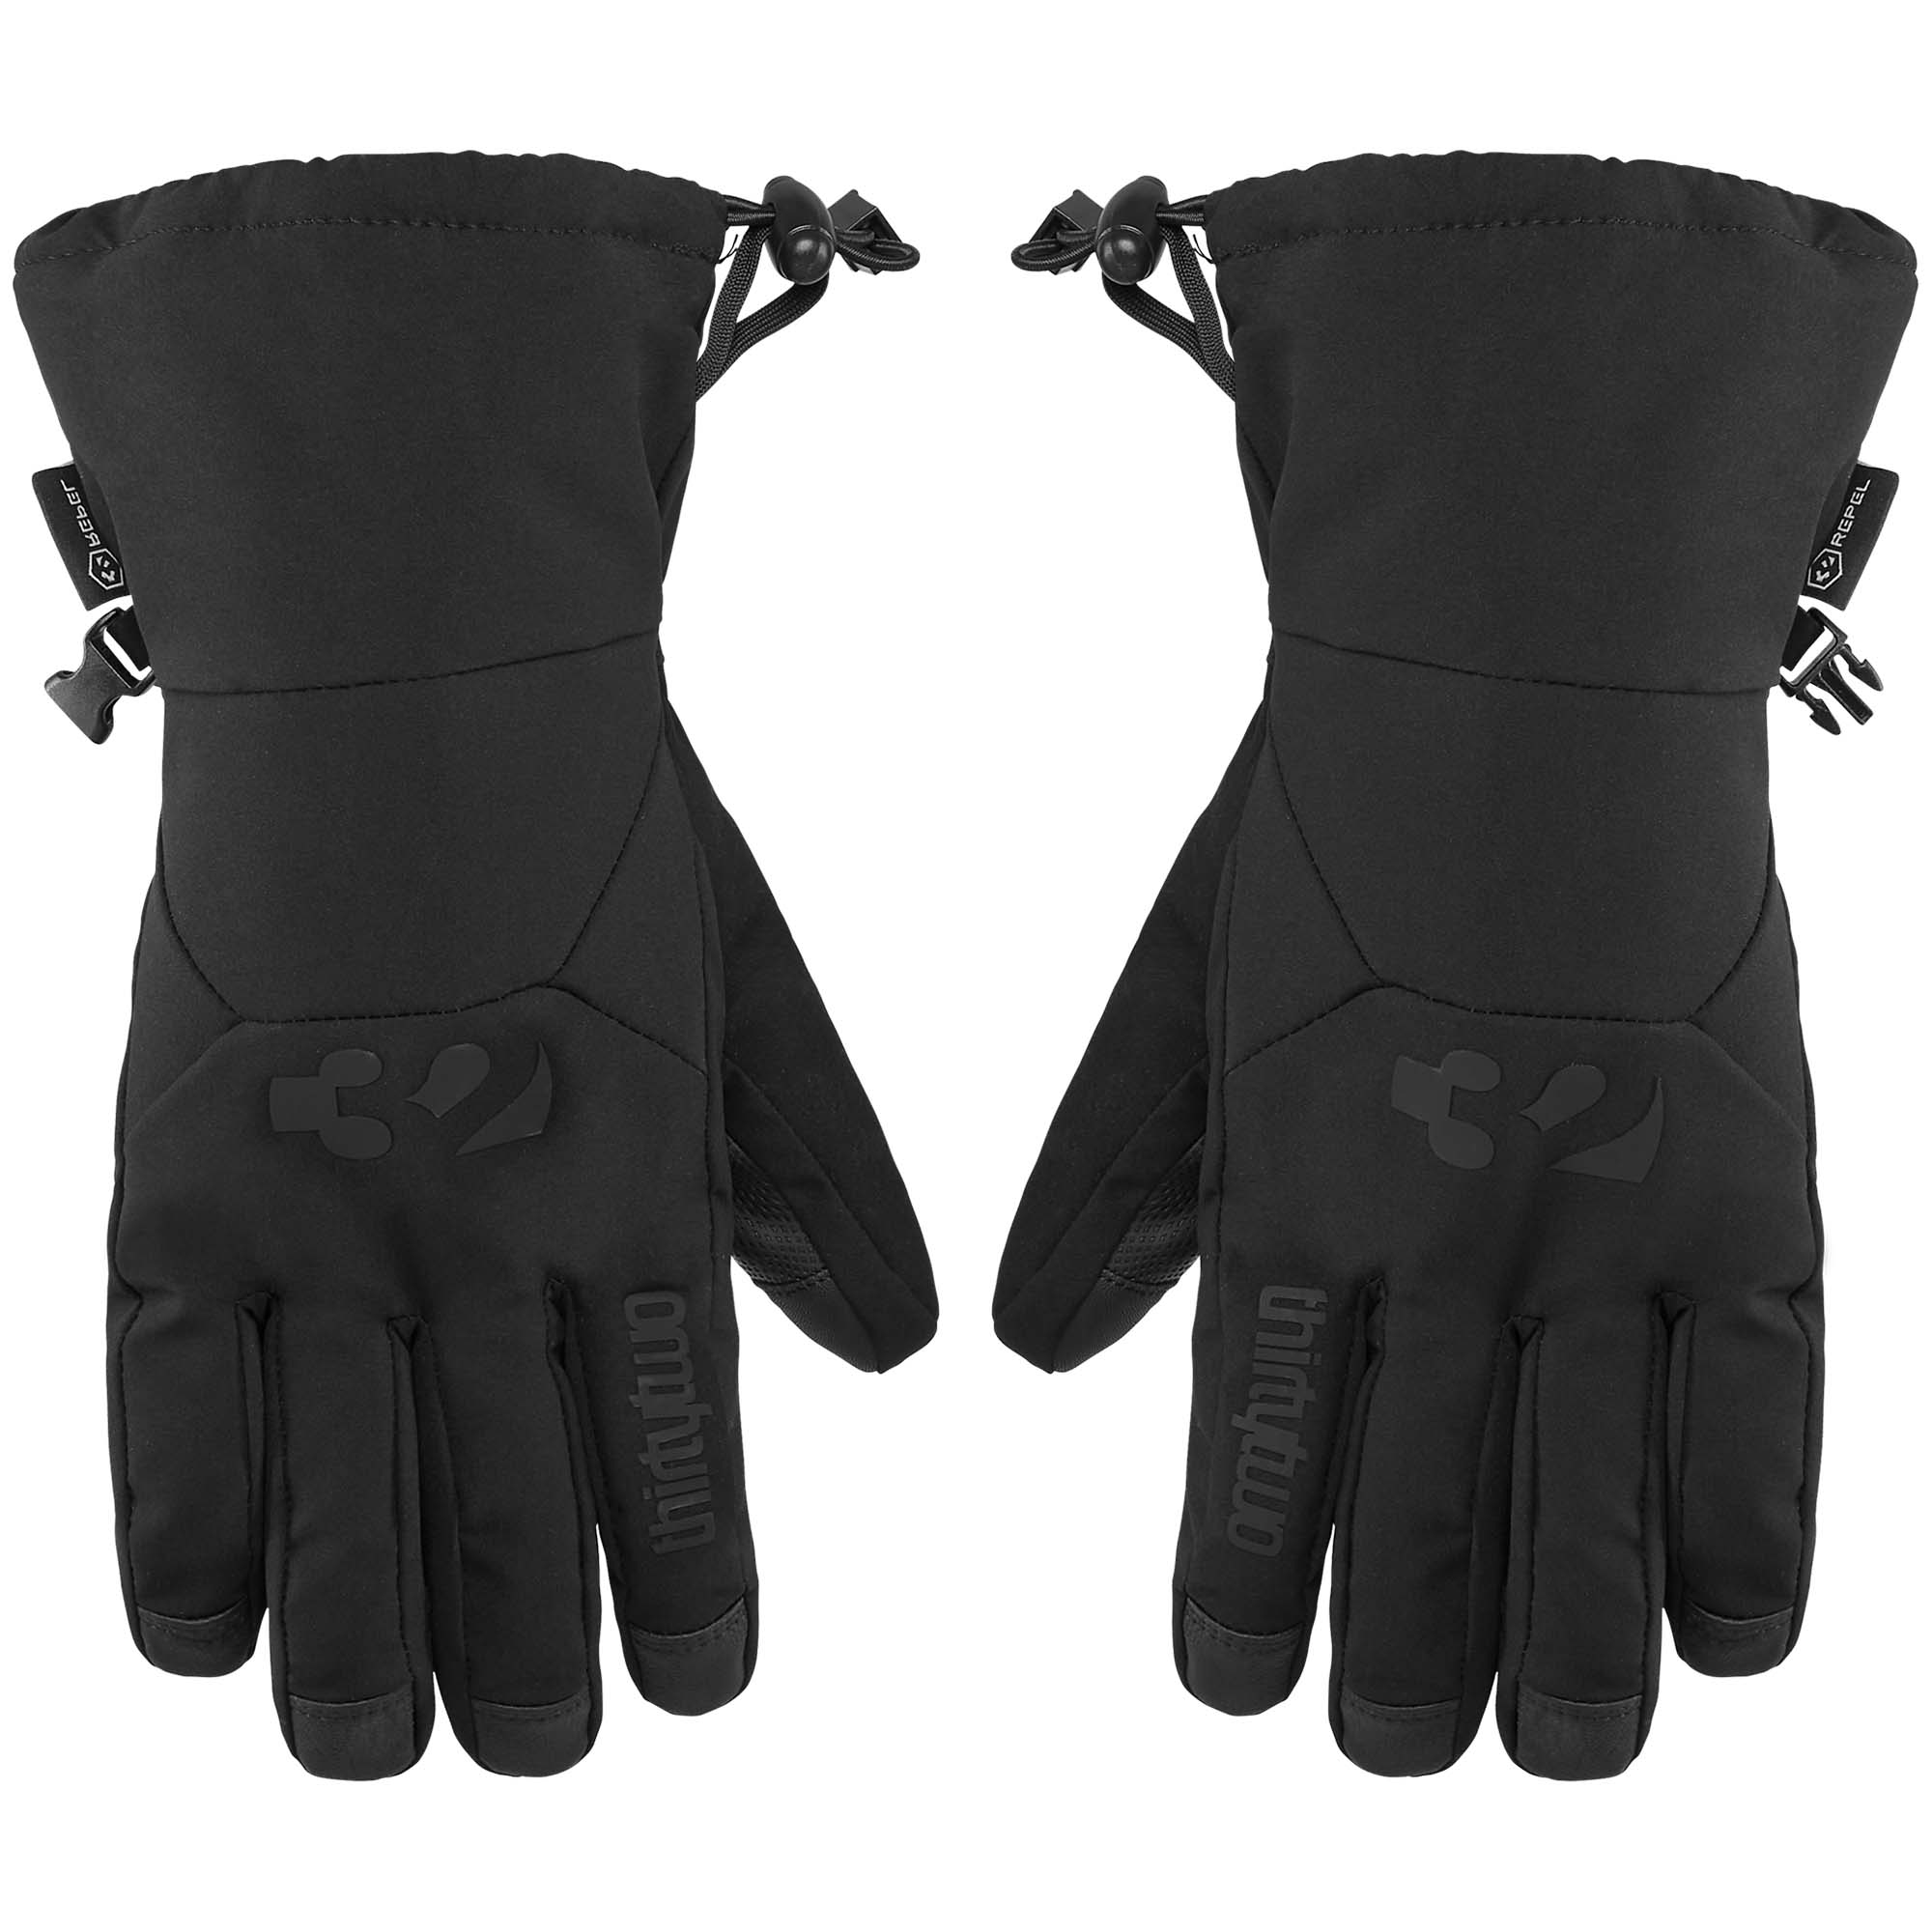 thirtytwo Lashed Ski/Snowboard Gloves